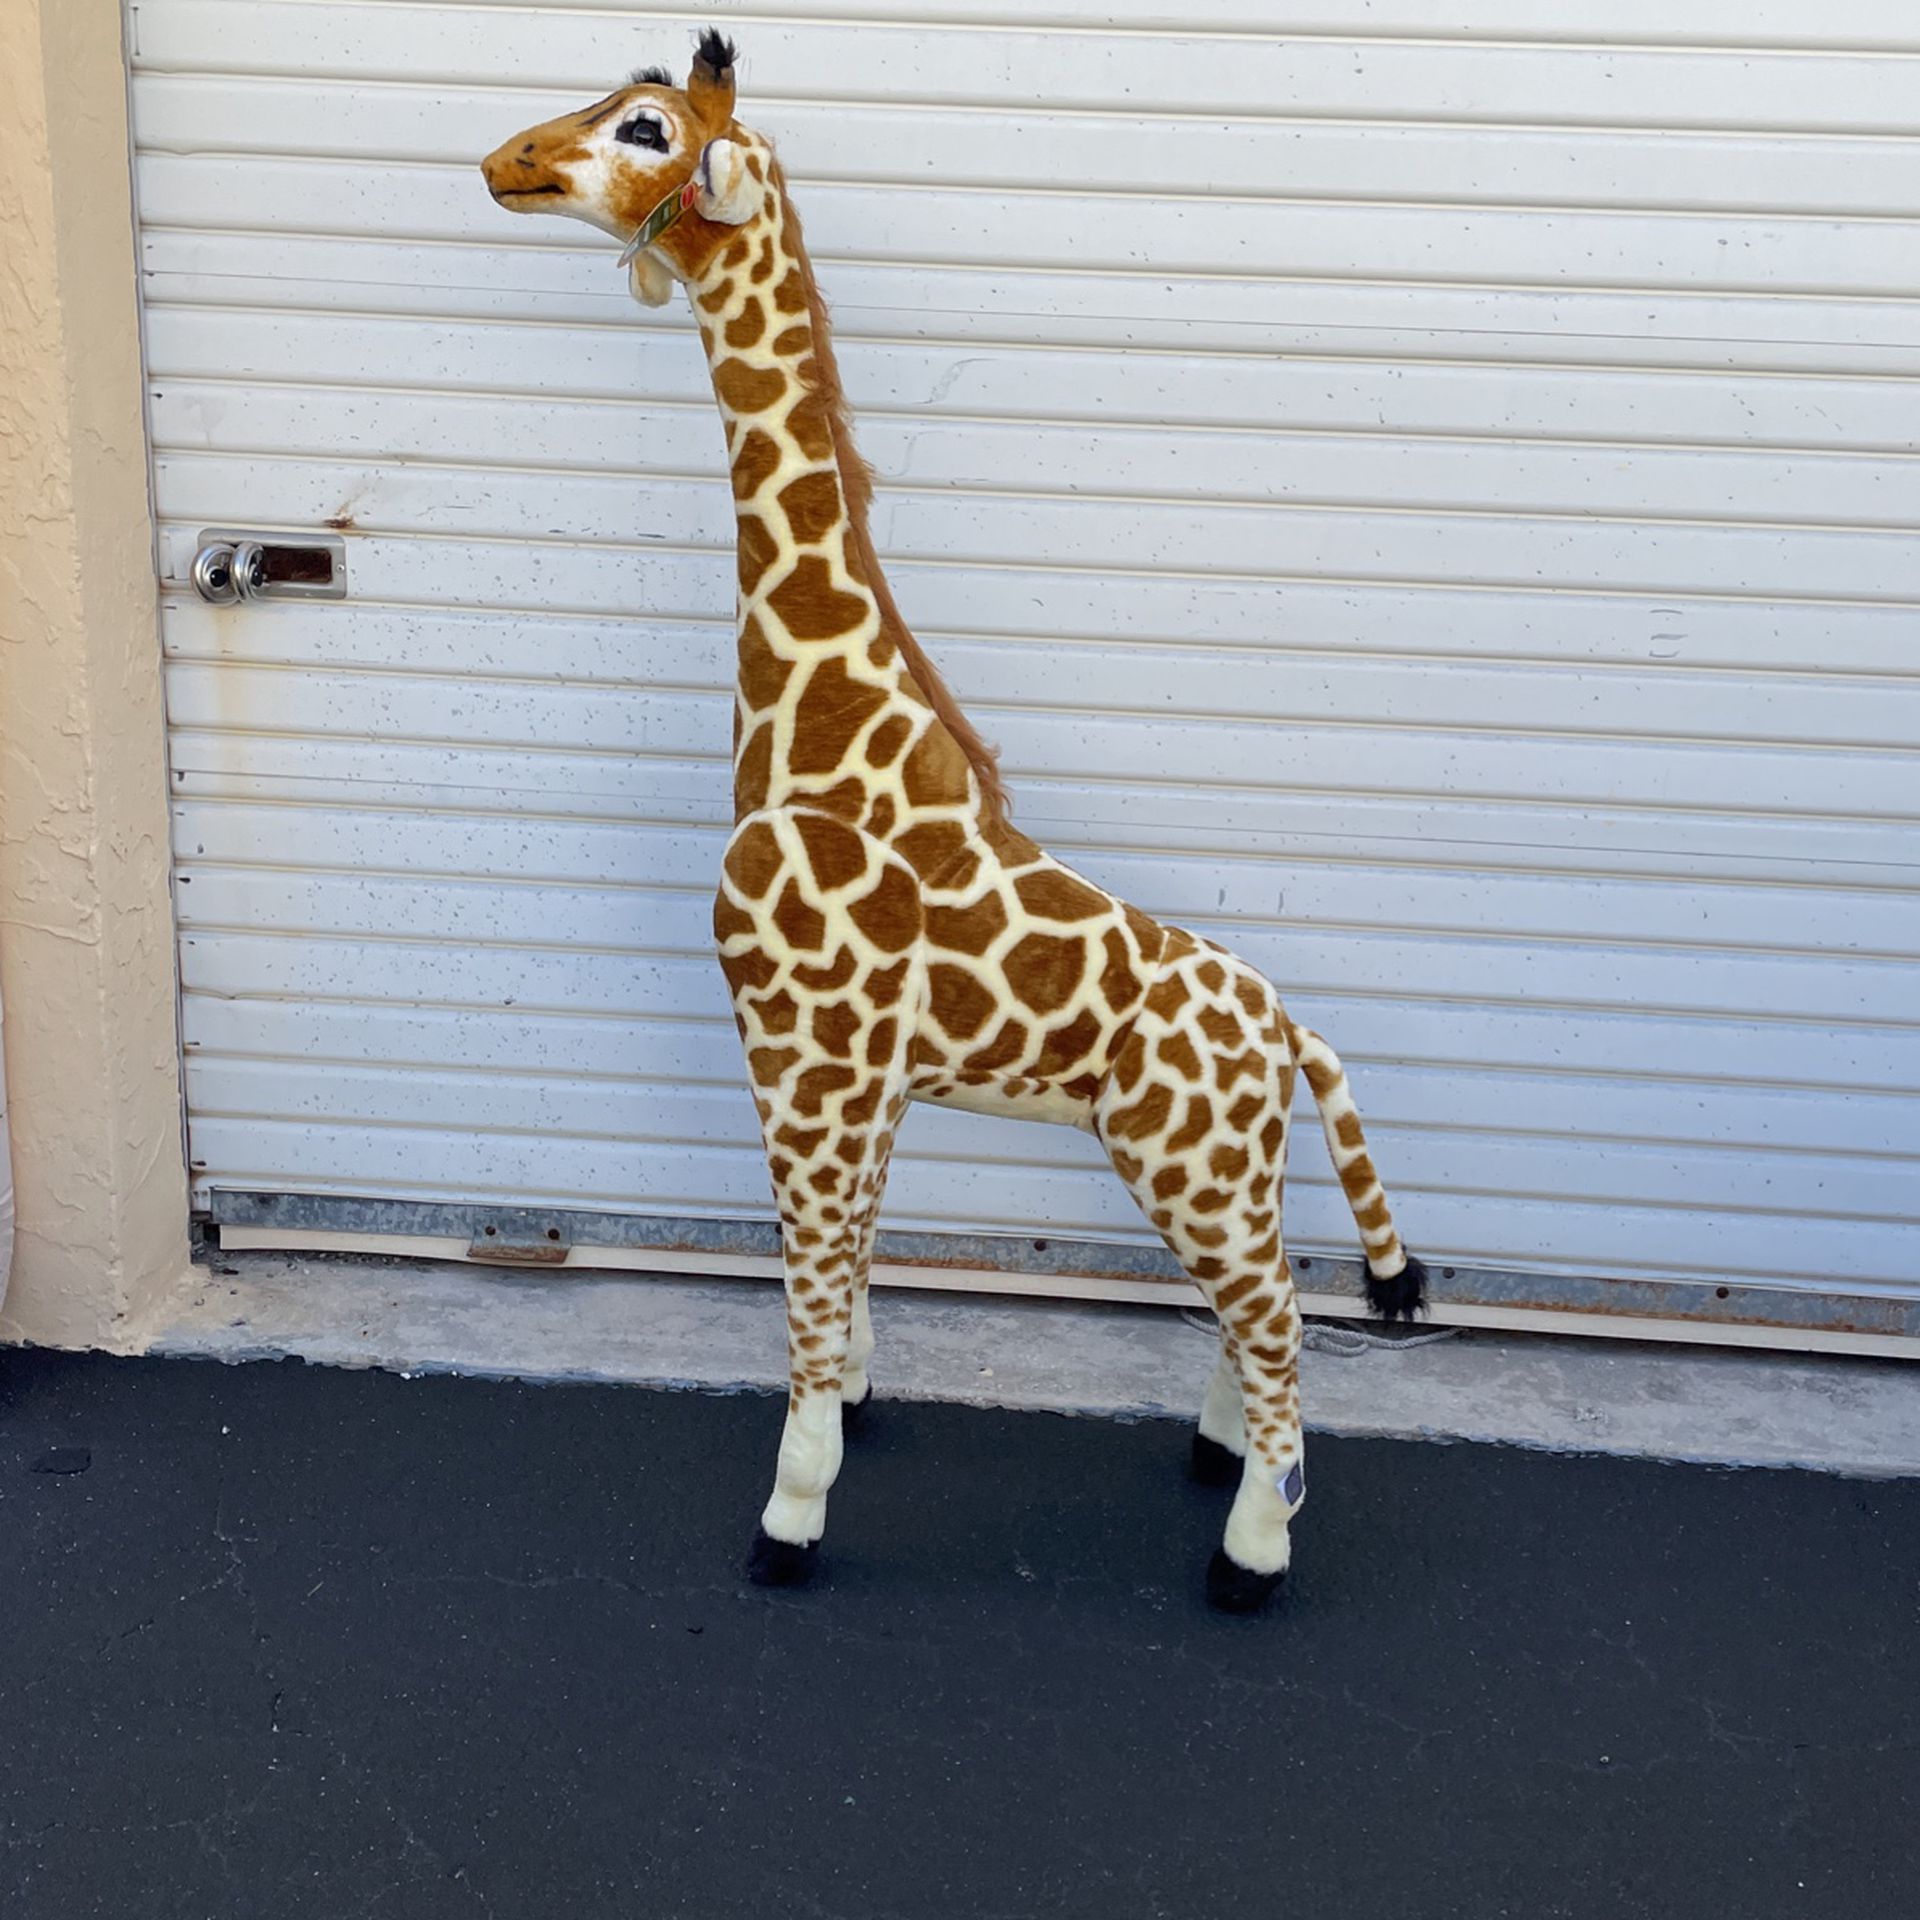 Melissa & Doug Plush Giraffe Stuffed Animal Kids Child Toy 4ft Tall